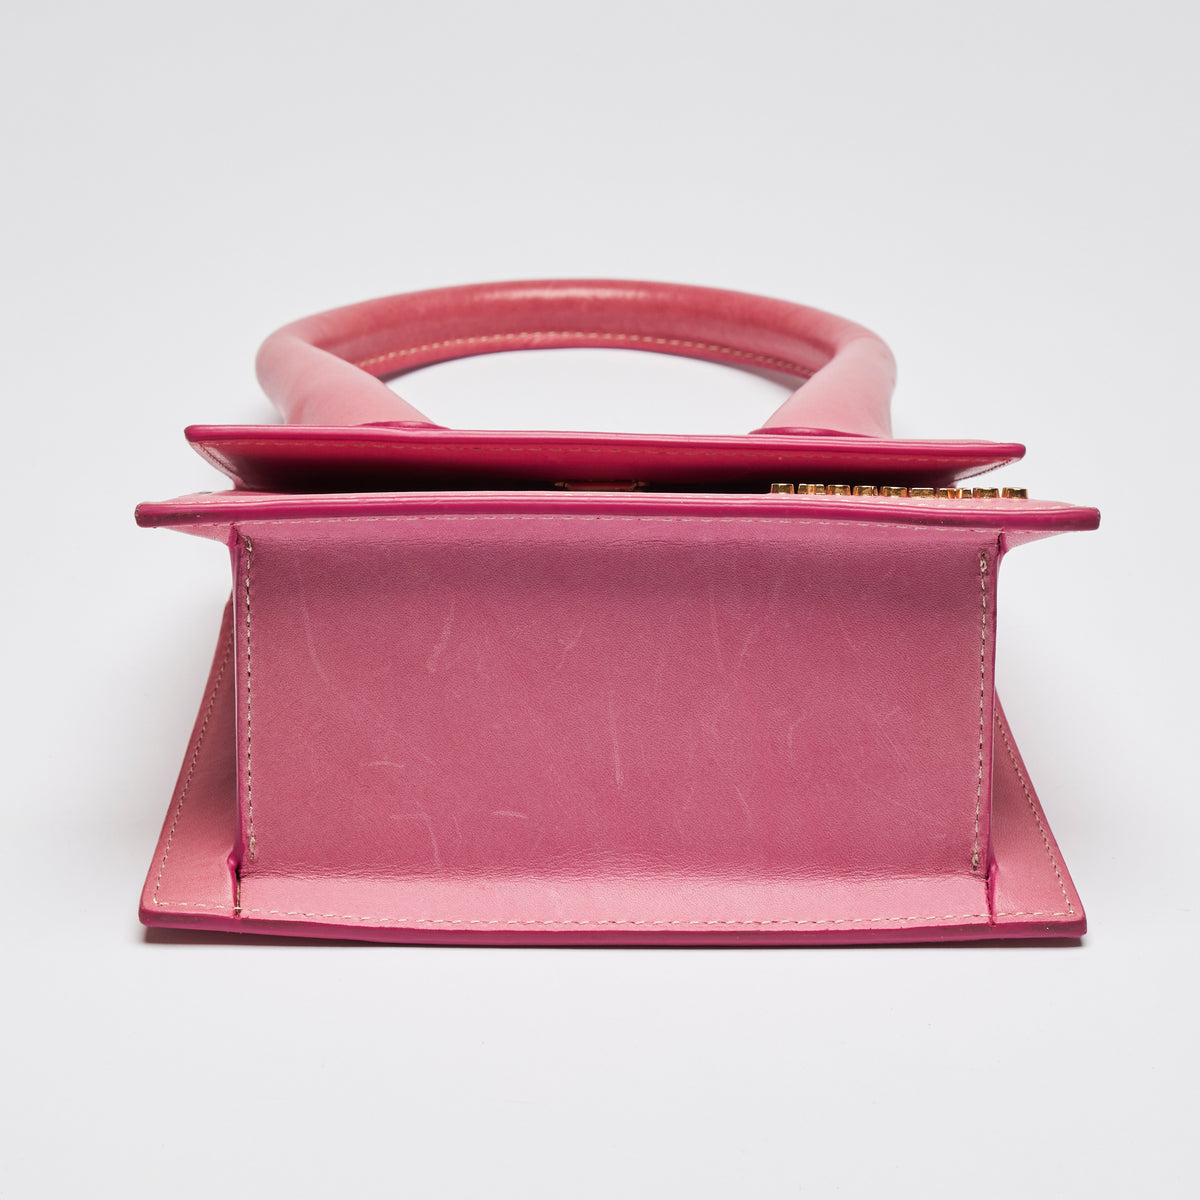 Pre-Loved Pink Leather Single Top Handle Mini Bag with Removable/Adjustable Shoulder Strap. (bottom)